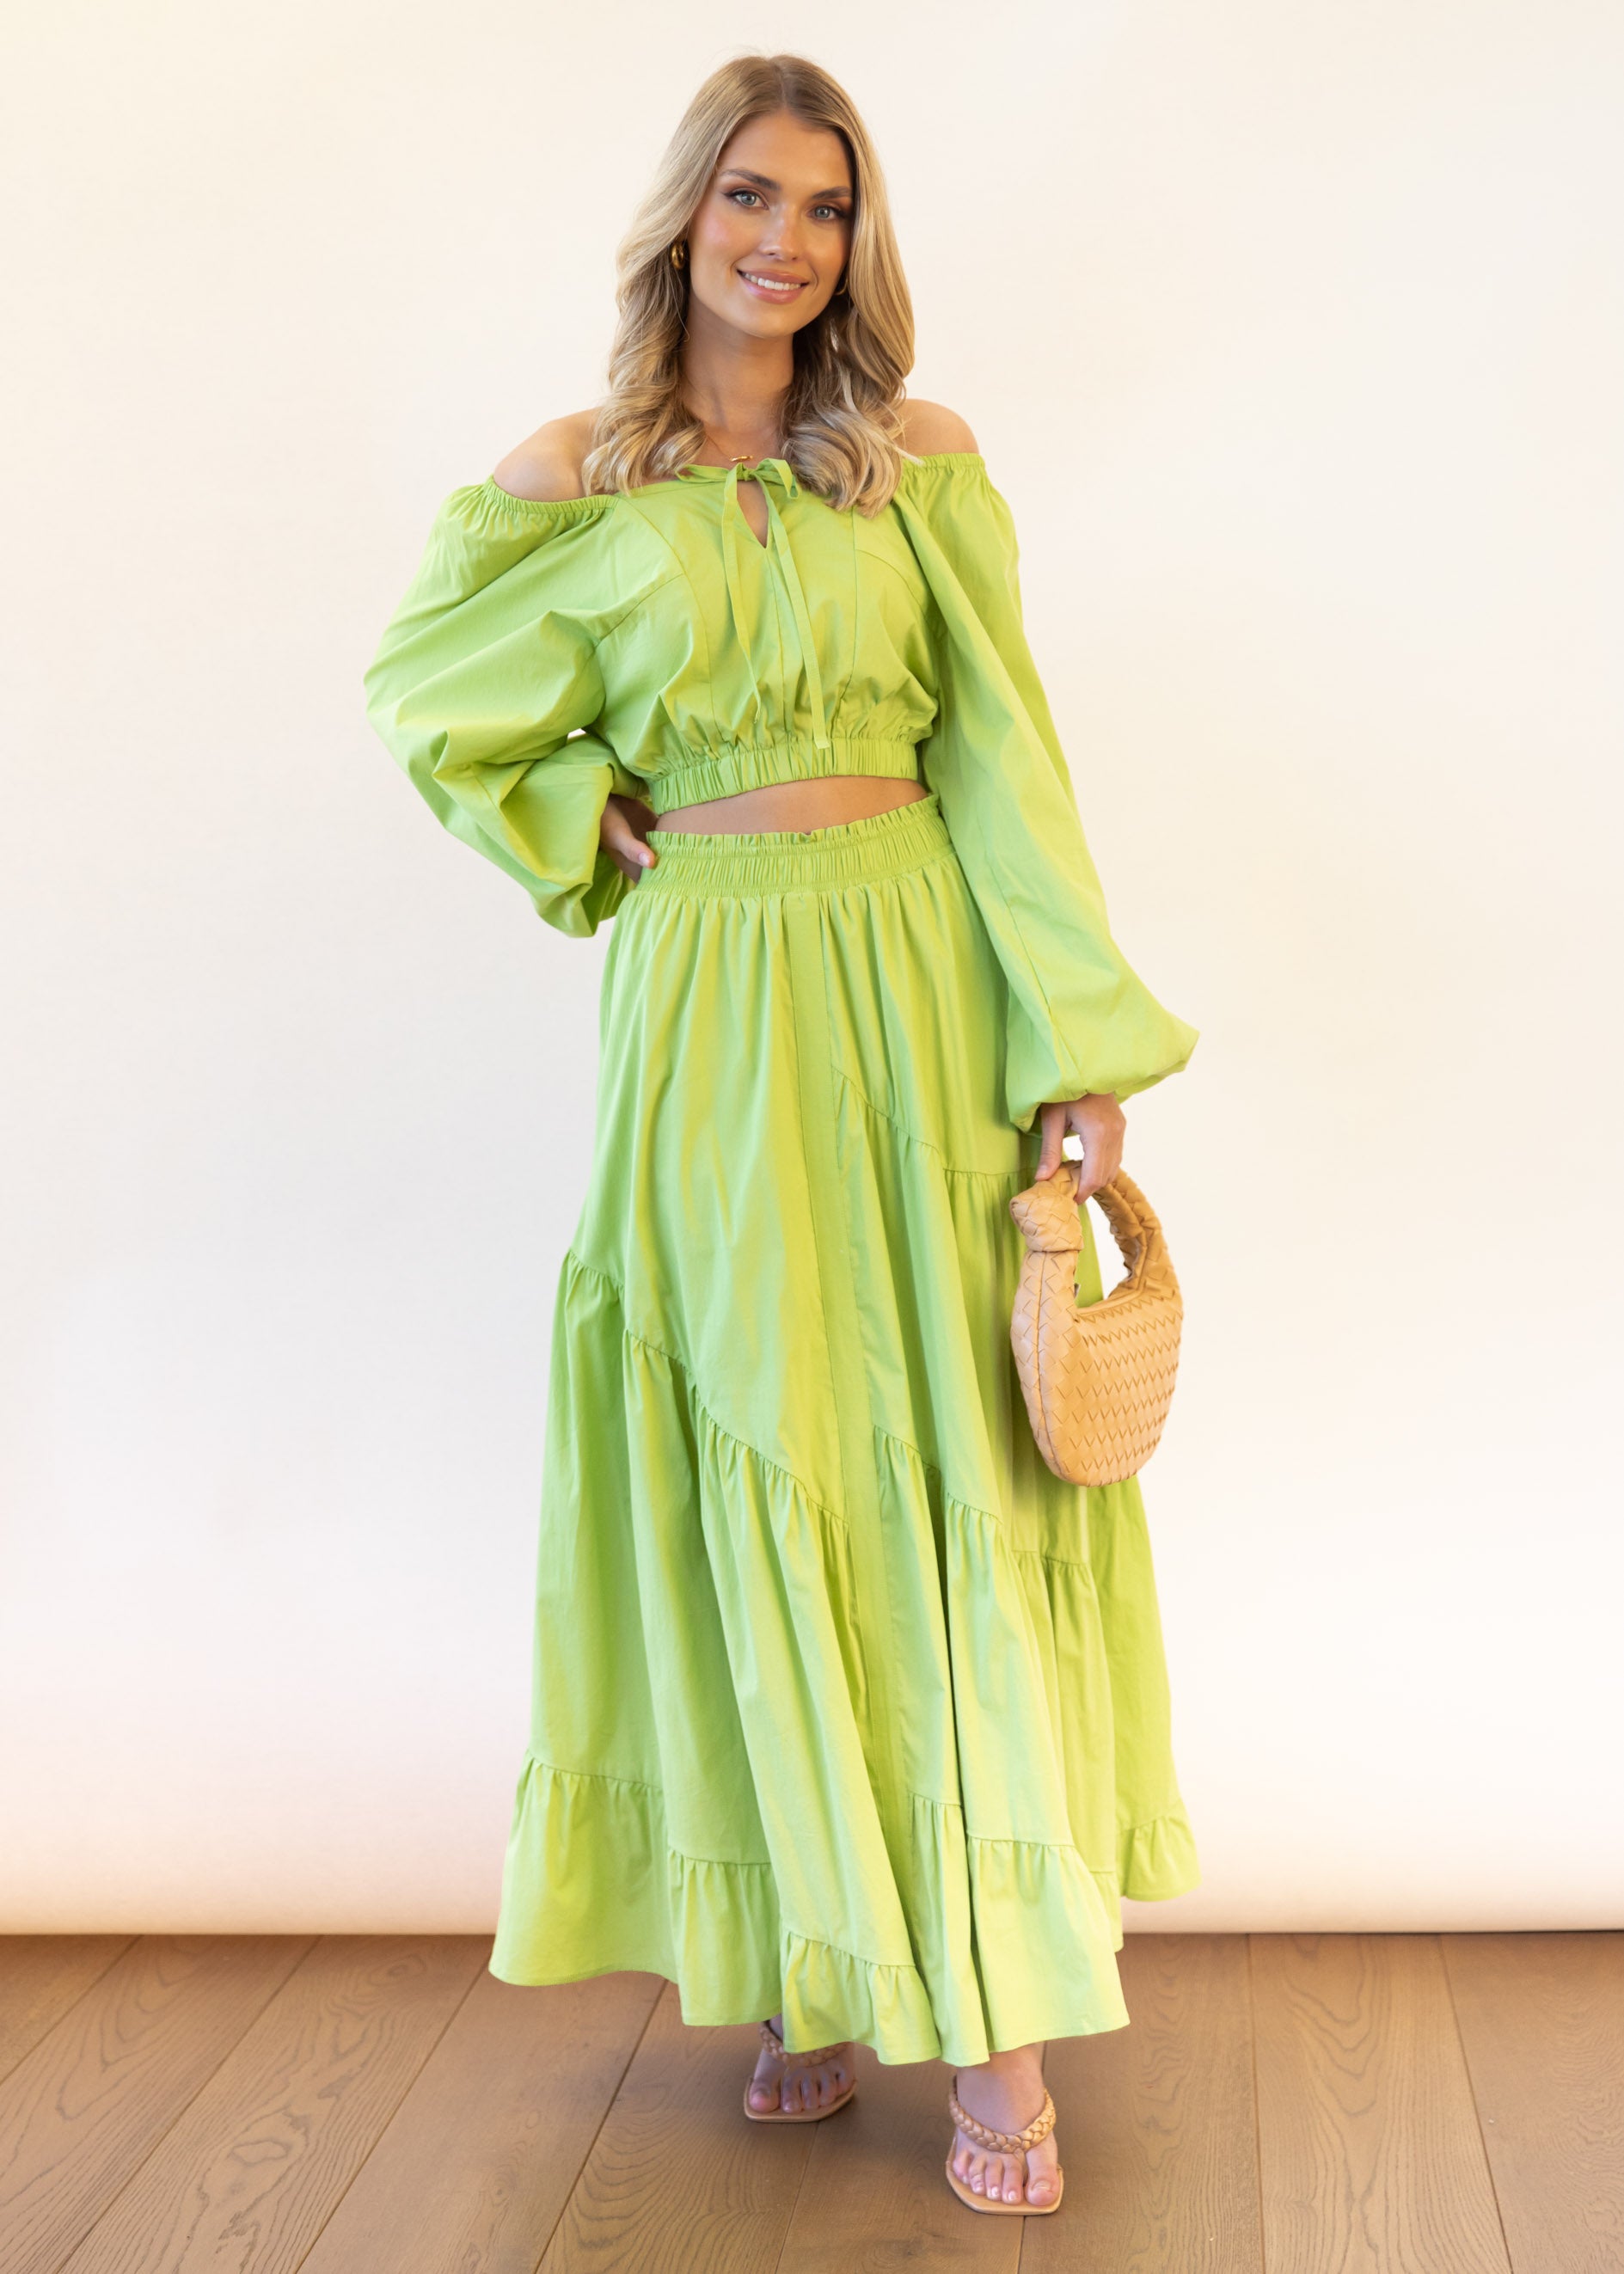 Gillia Cropped Blouse - Lime